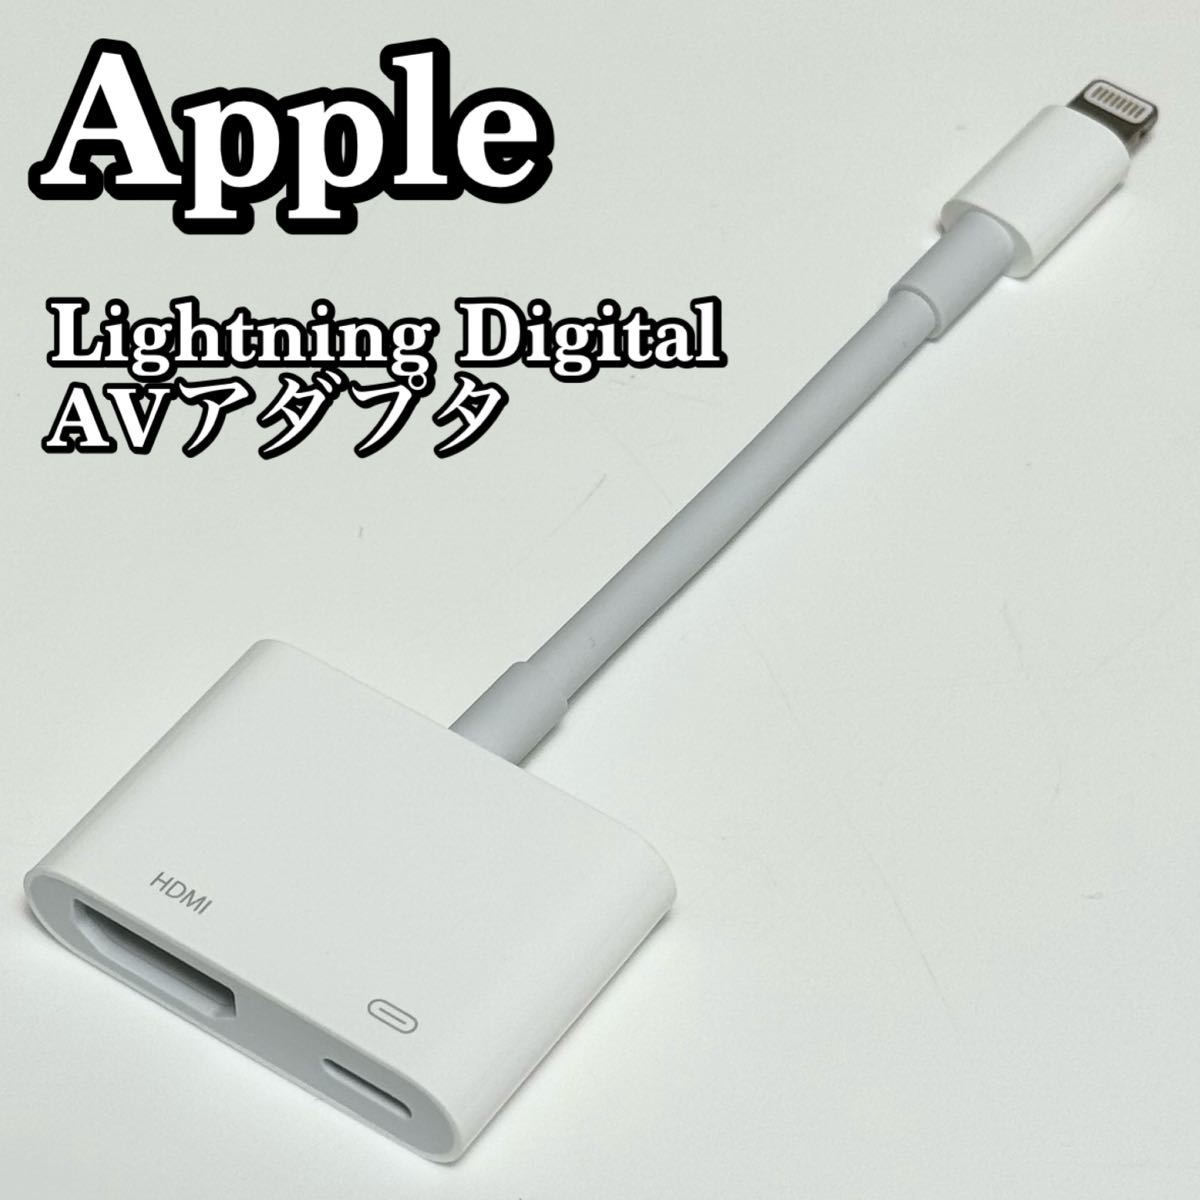 Apple 純正 Lightning Digital AVアダプタ A1438 MD826AM/A アップル HDMI変換ケーブル 映像用ケーブル HDMIケーブル_画像1